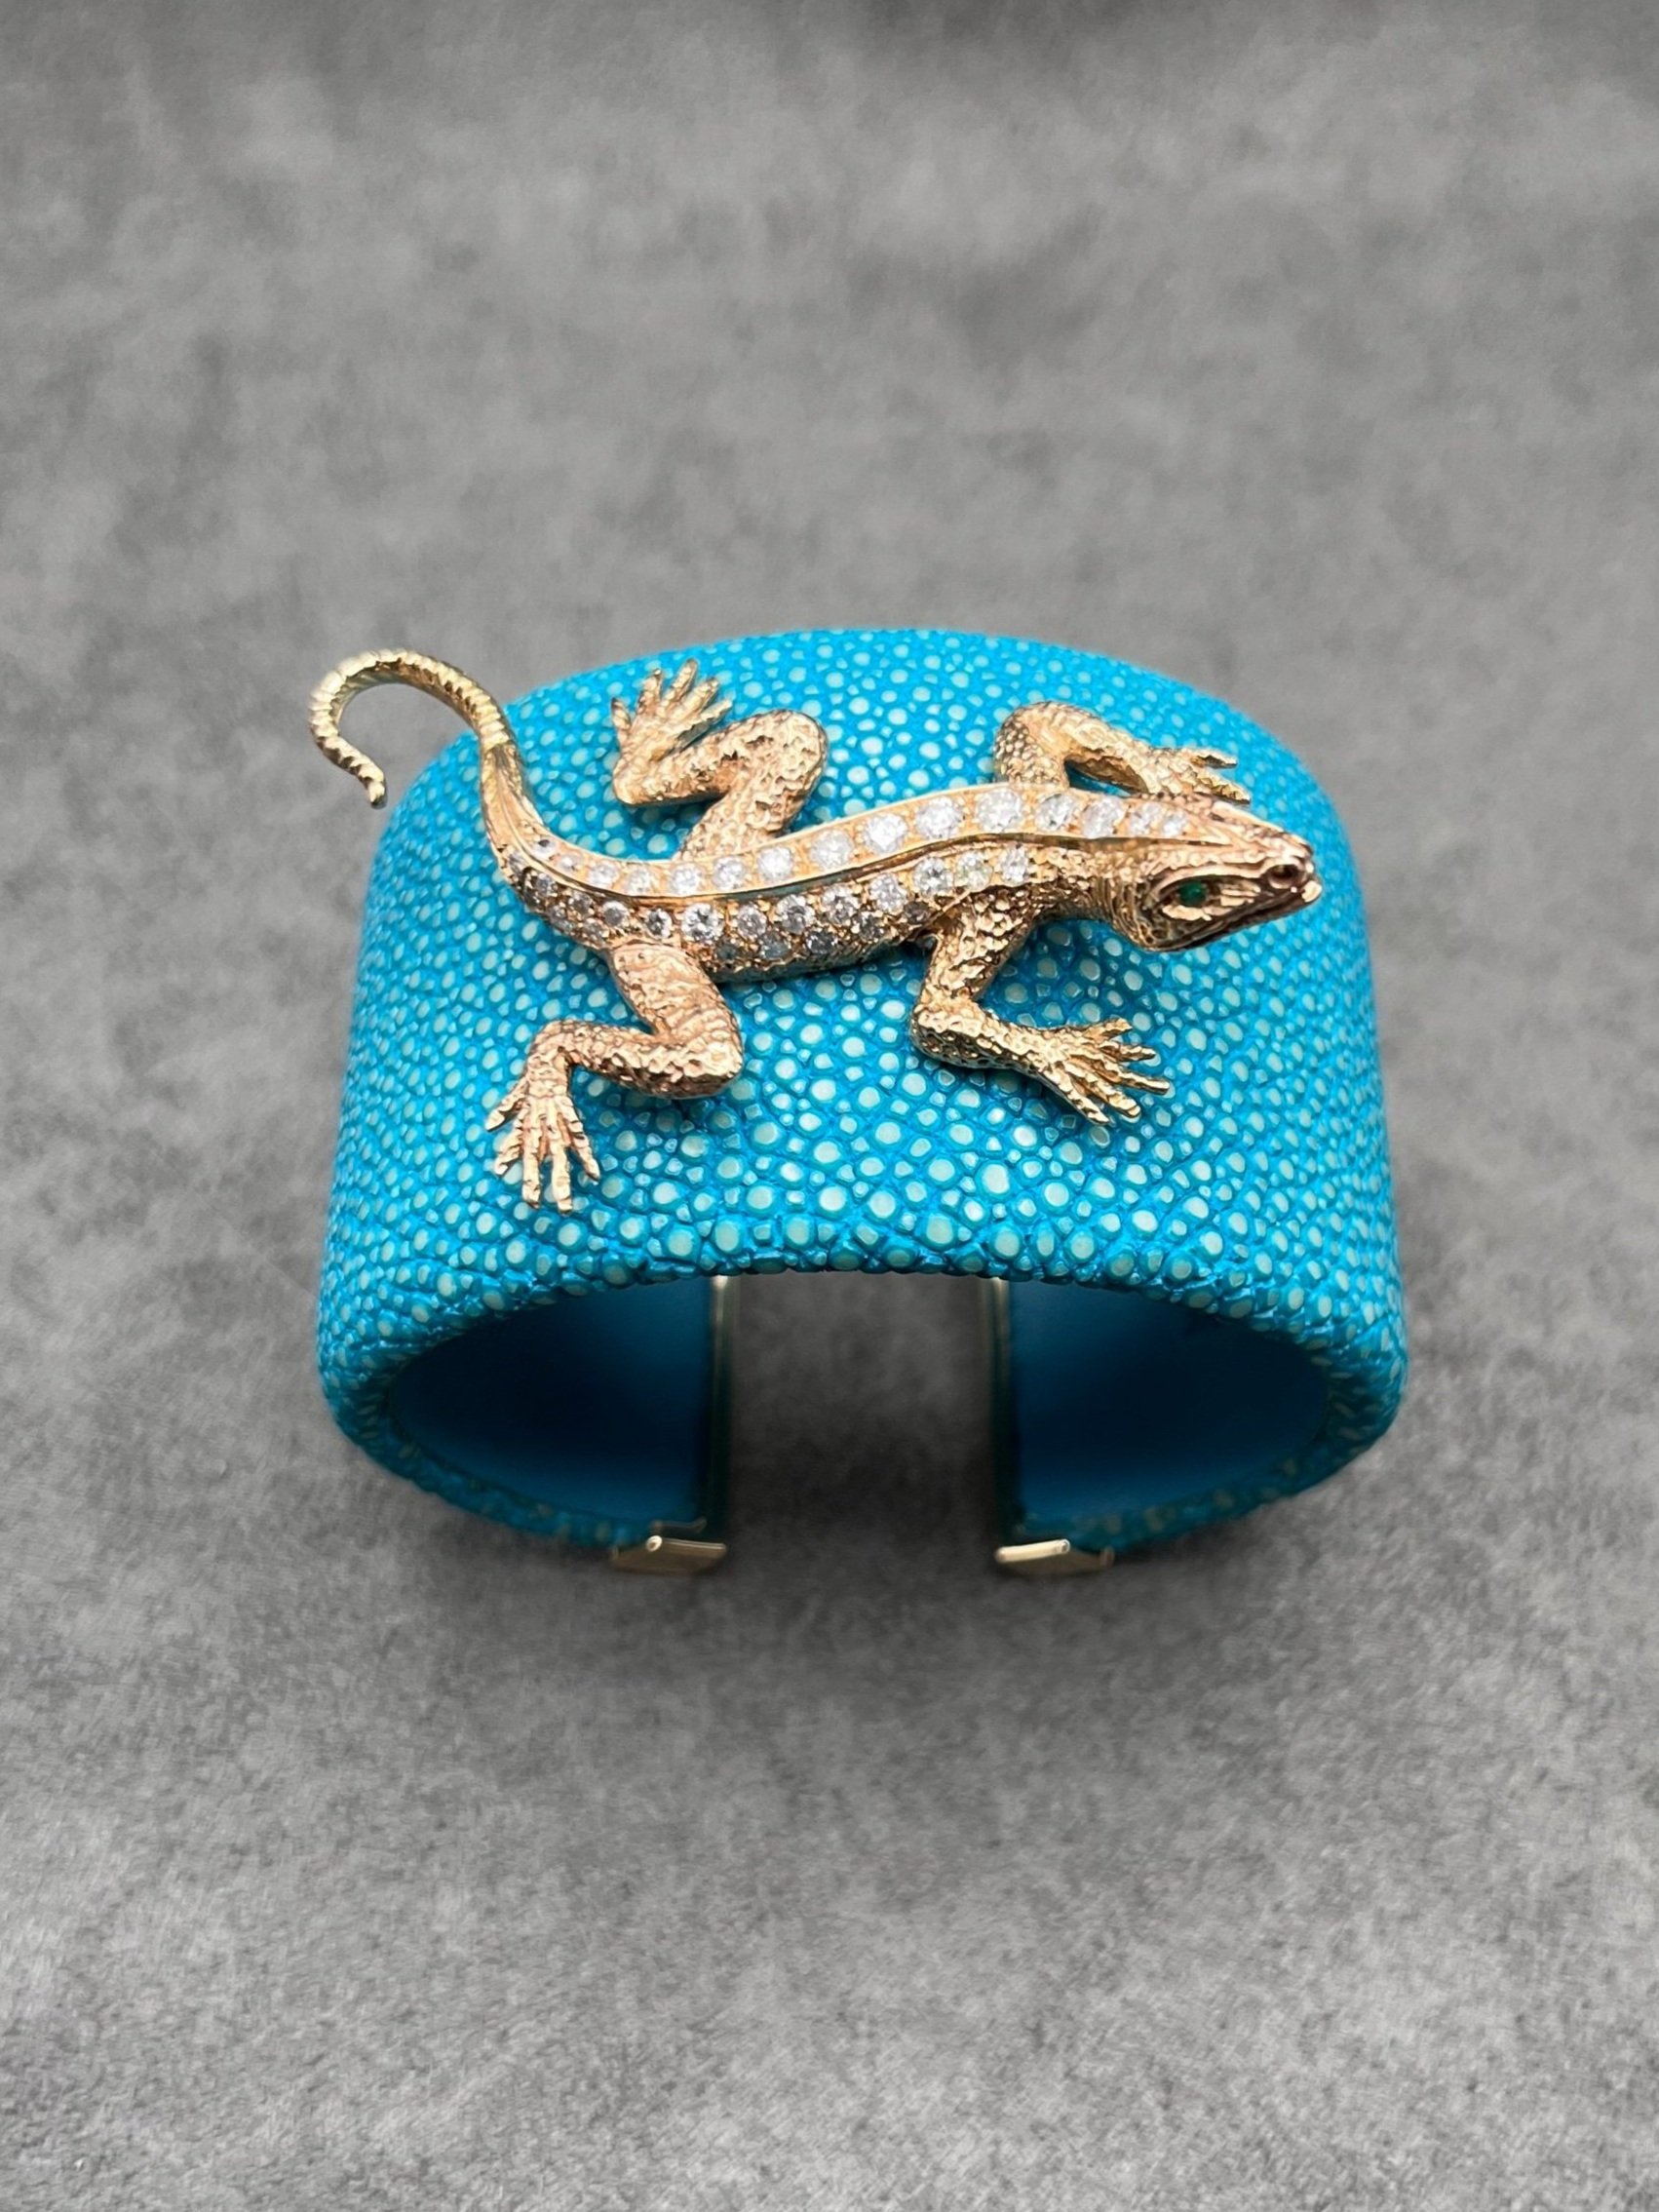 925 Sterling Silver Lizard Cuff Bracelet from Bali - Gecko Parade | NOVICA